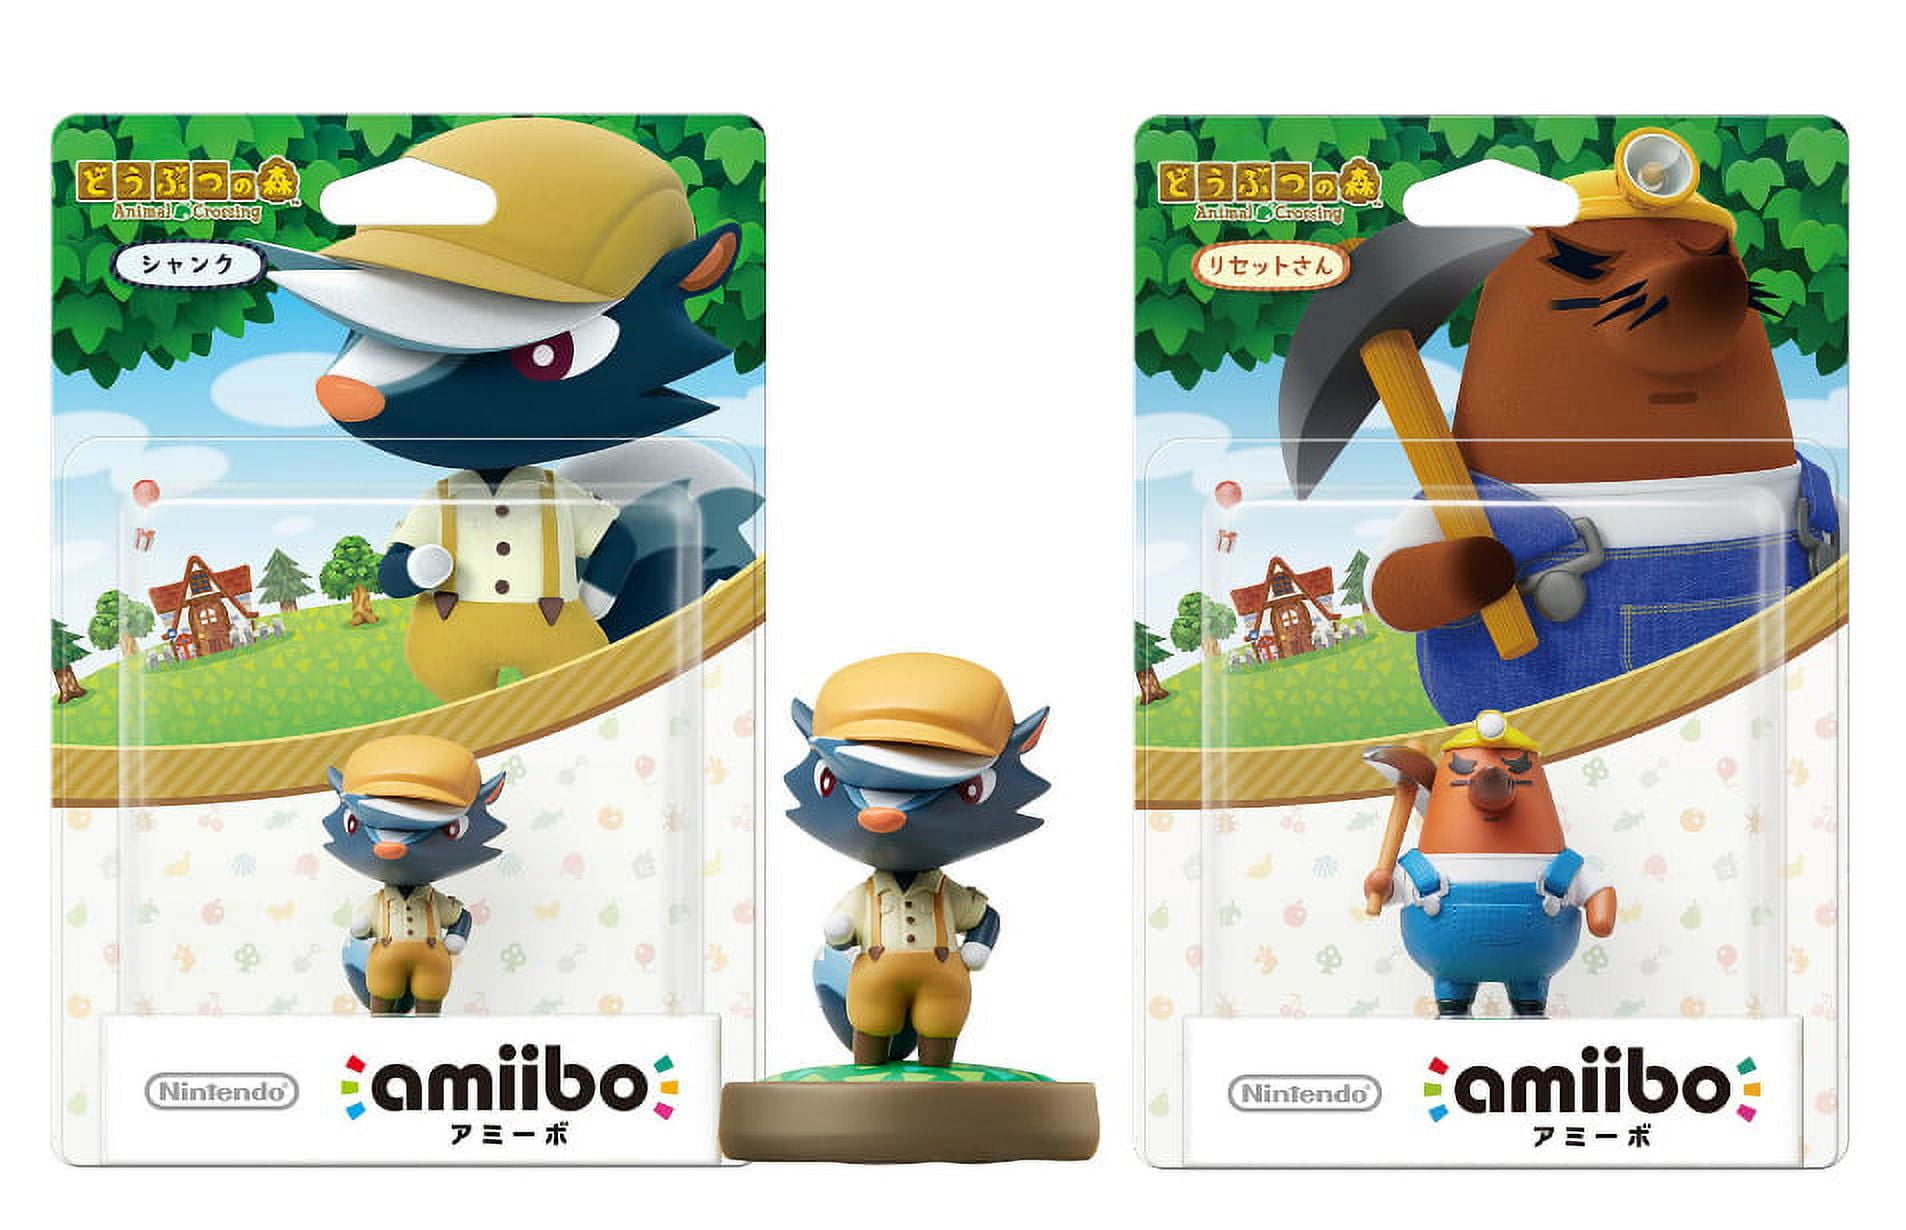 Animal Crossing Series 3-Pack Amiibo (Animal Crossing Series) - Mr. Resetti  - Kapp'n Amiibo Bundle for Nintendo Switch - 3DS - Wii U (Bulk Packaging)